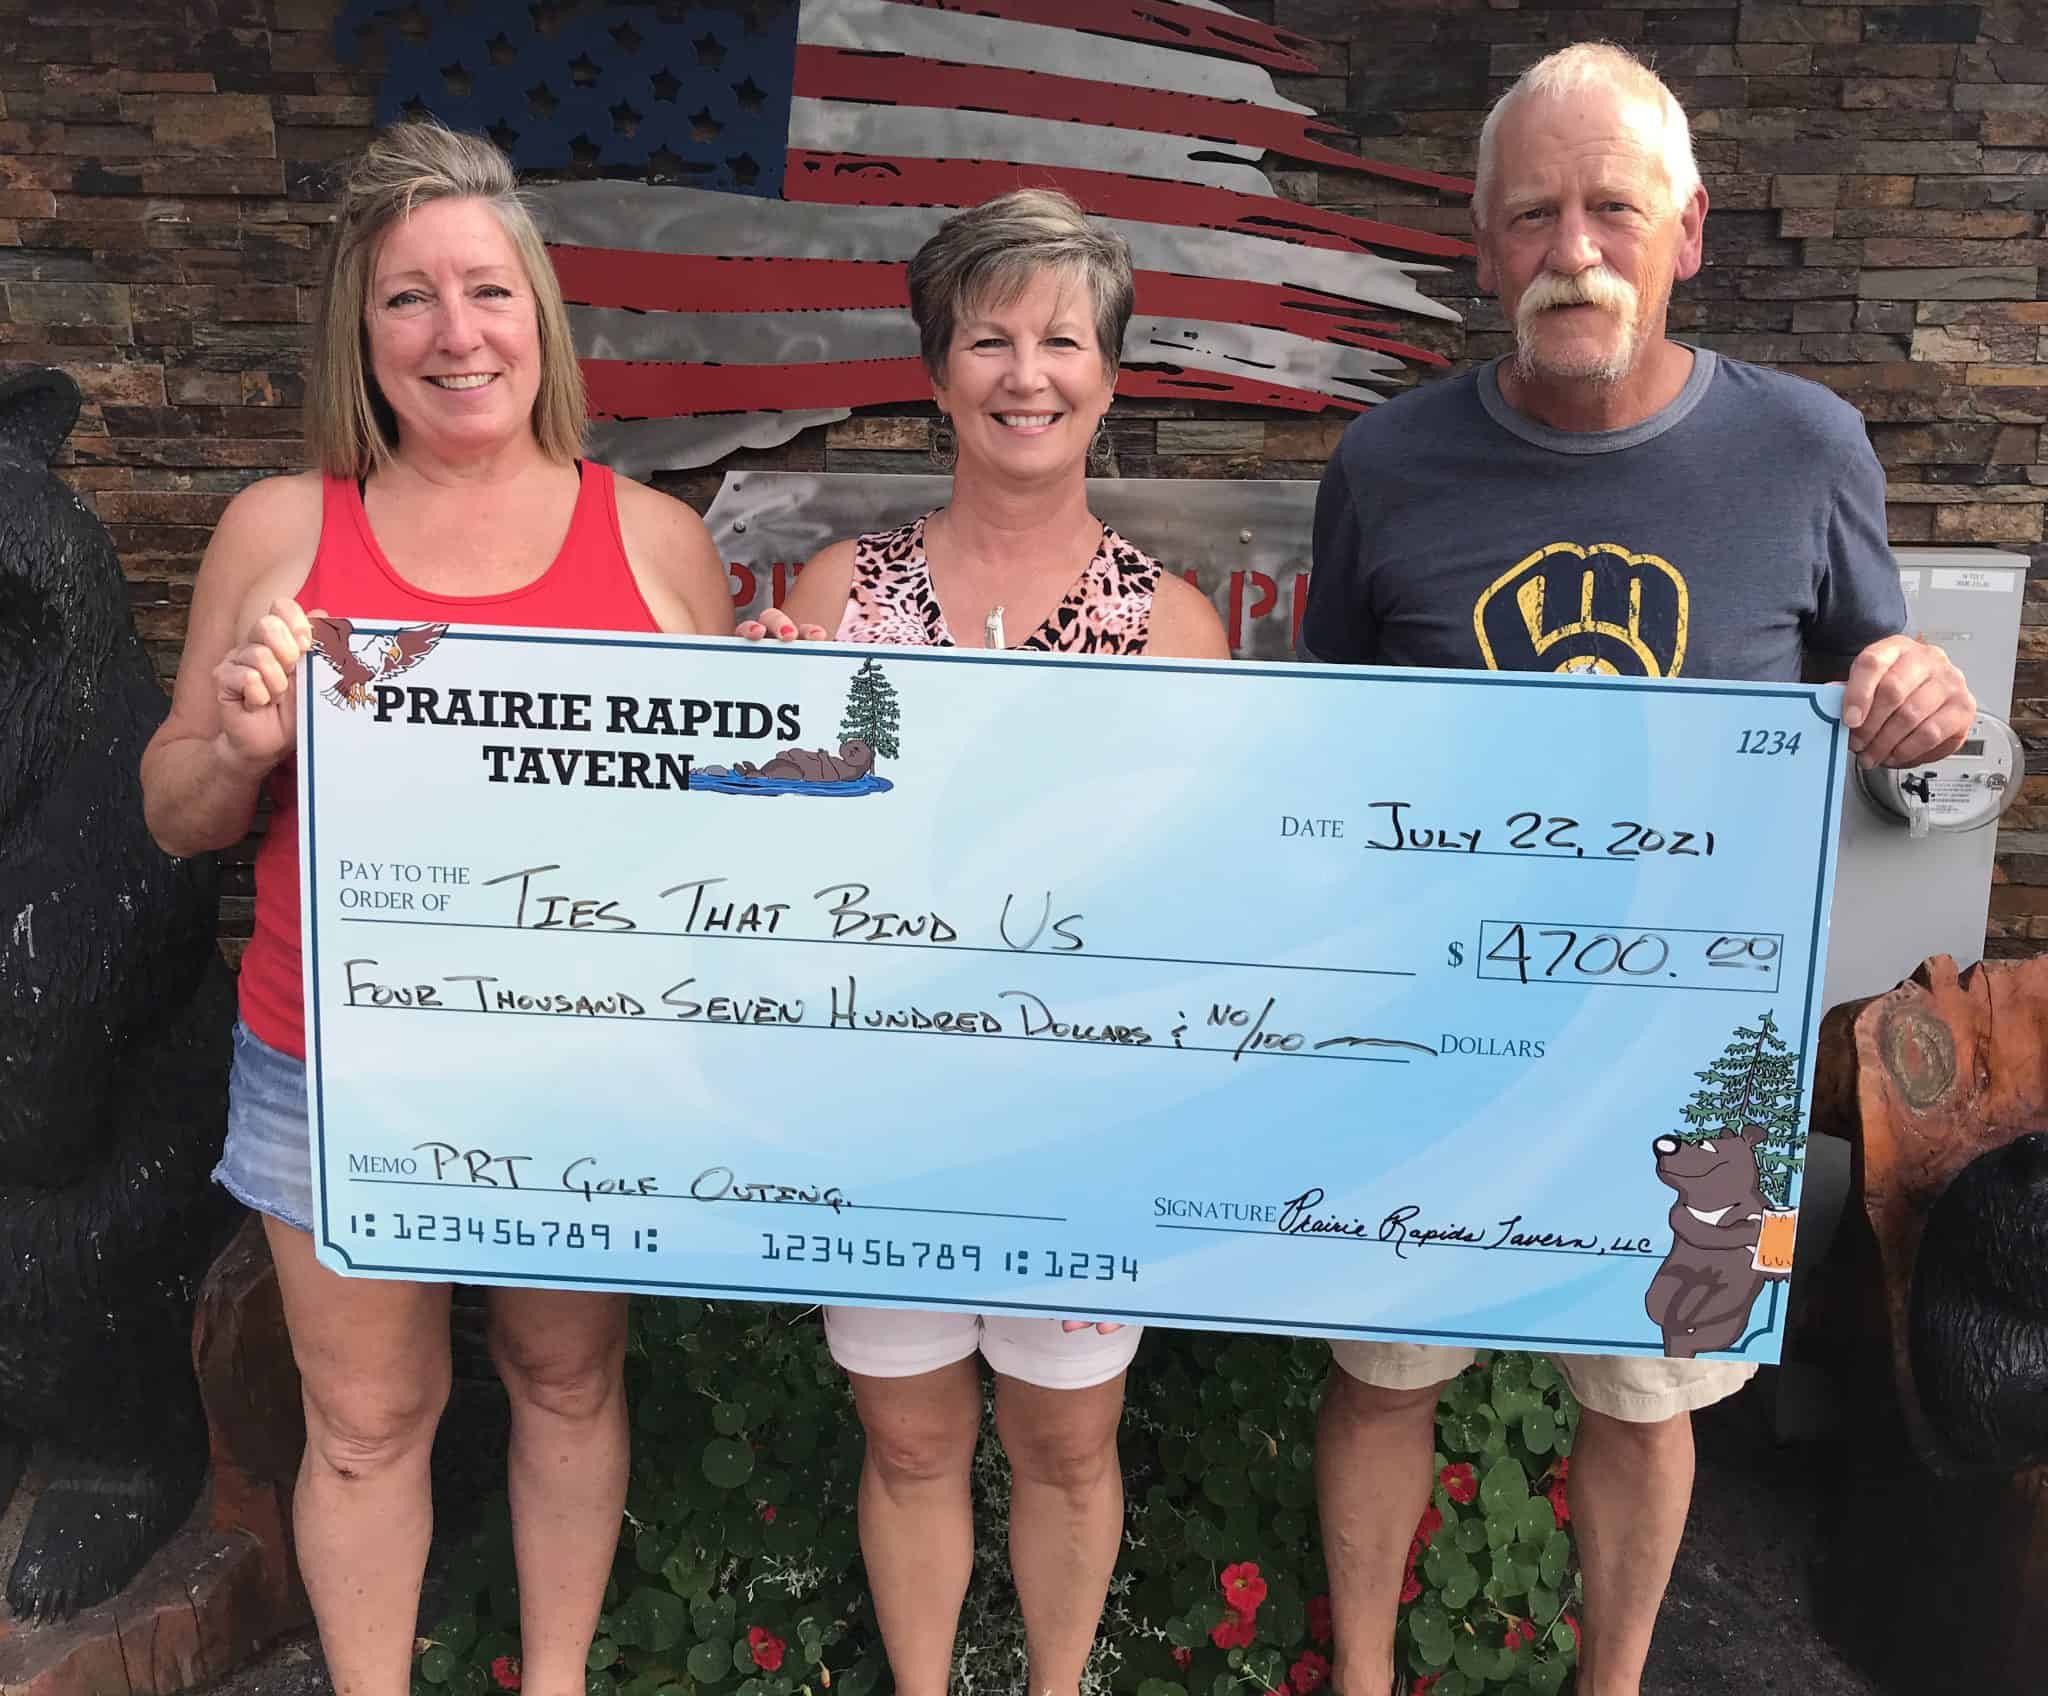 Prairie Rapids Tavern golf outing raises $4,700 for Ties That Bind Us